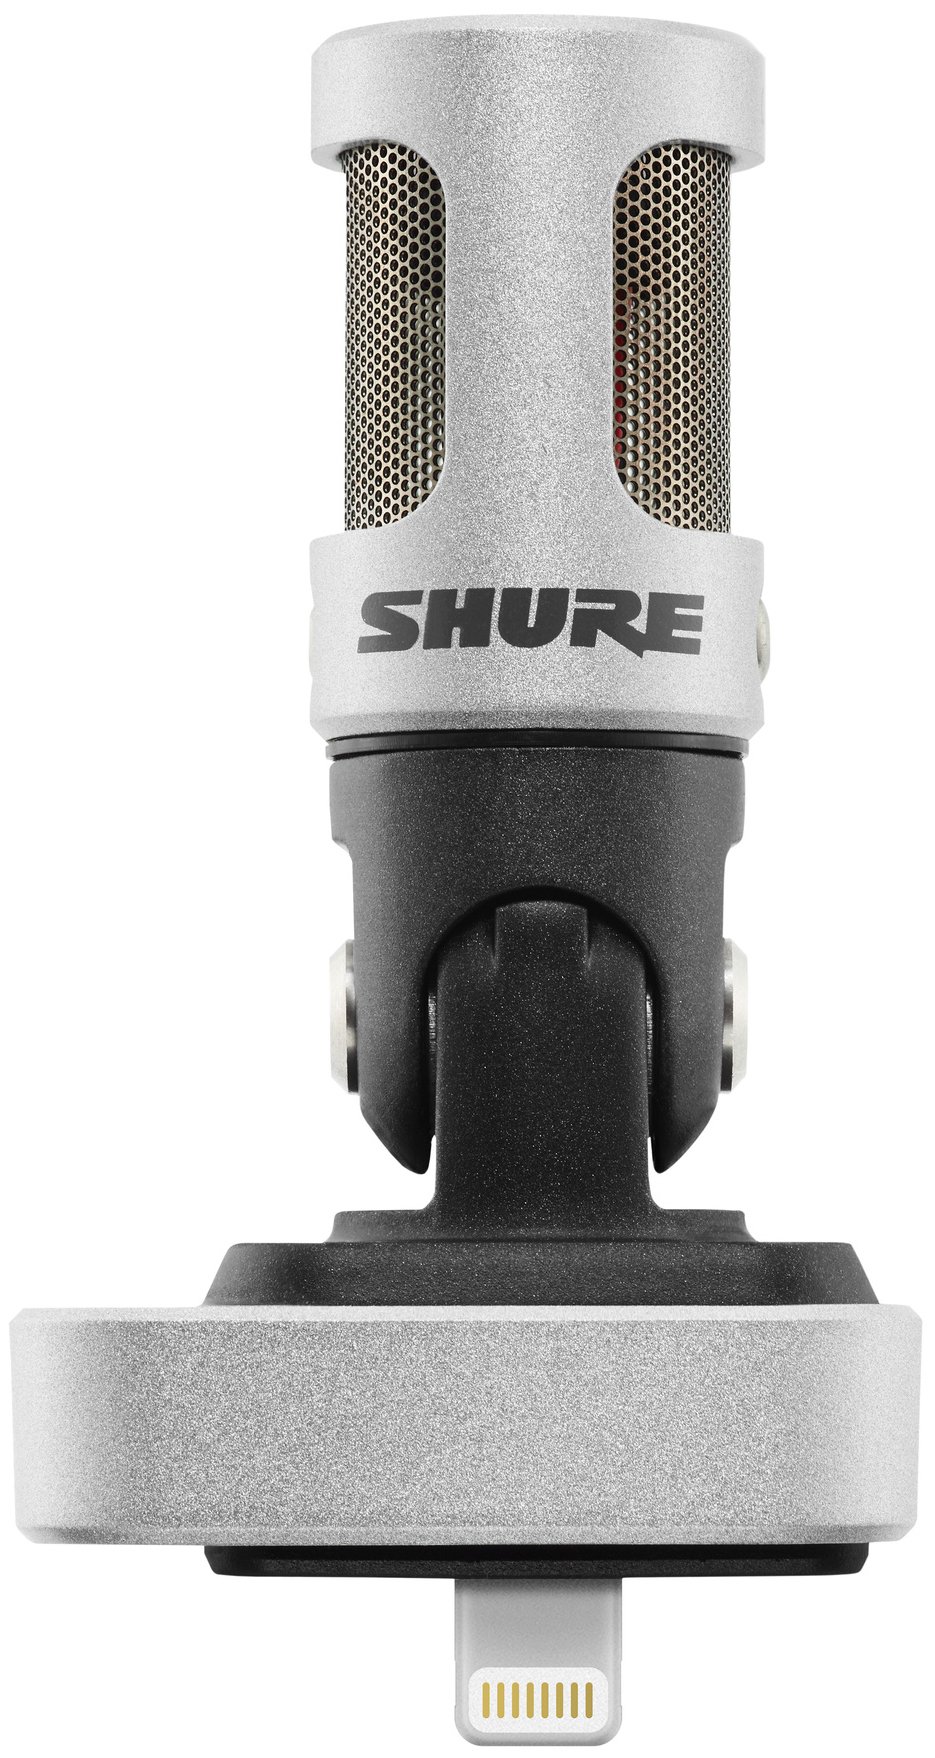 Shure Motiv Digital Stereo Condenser Microphone